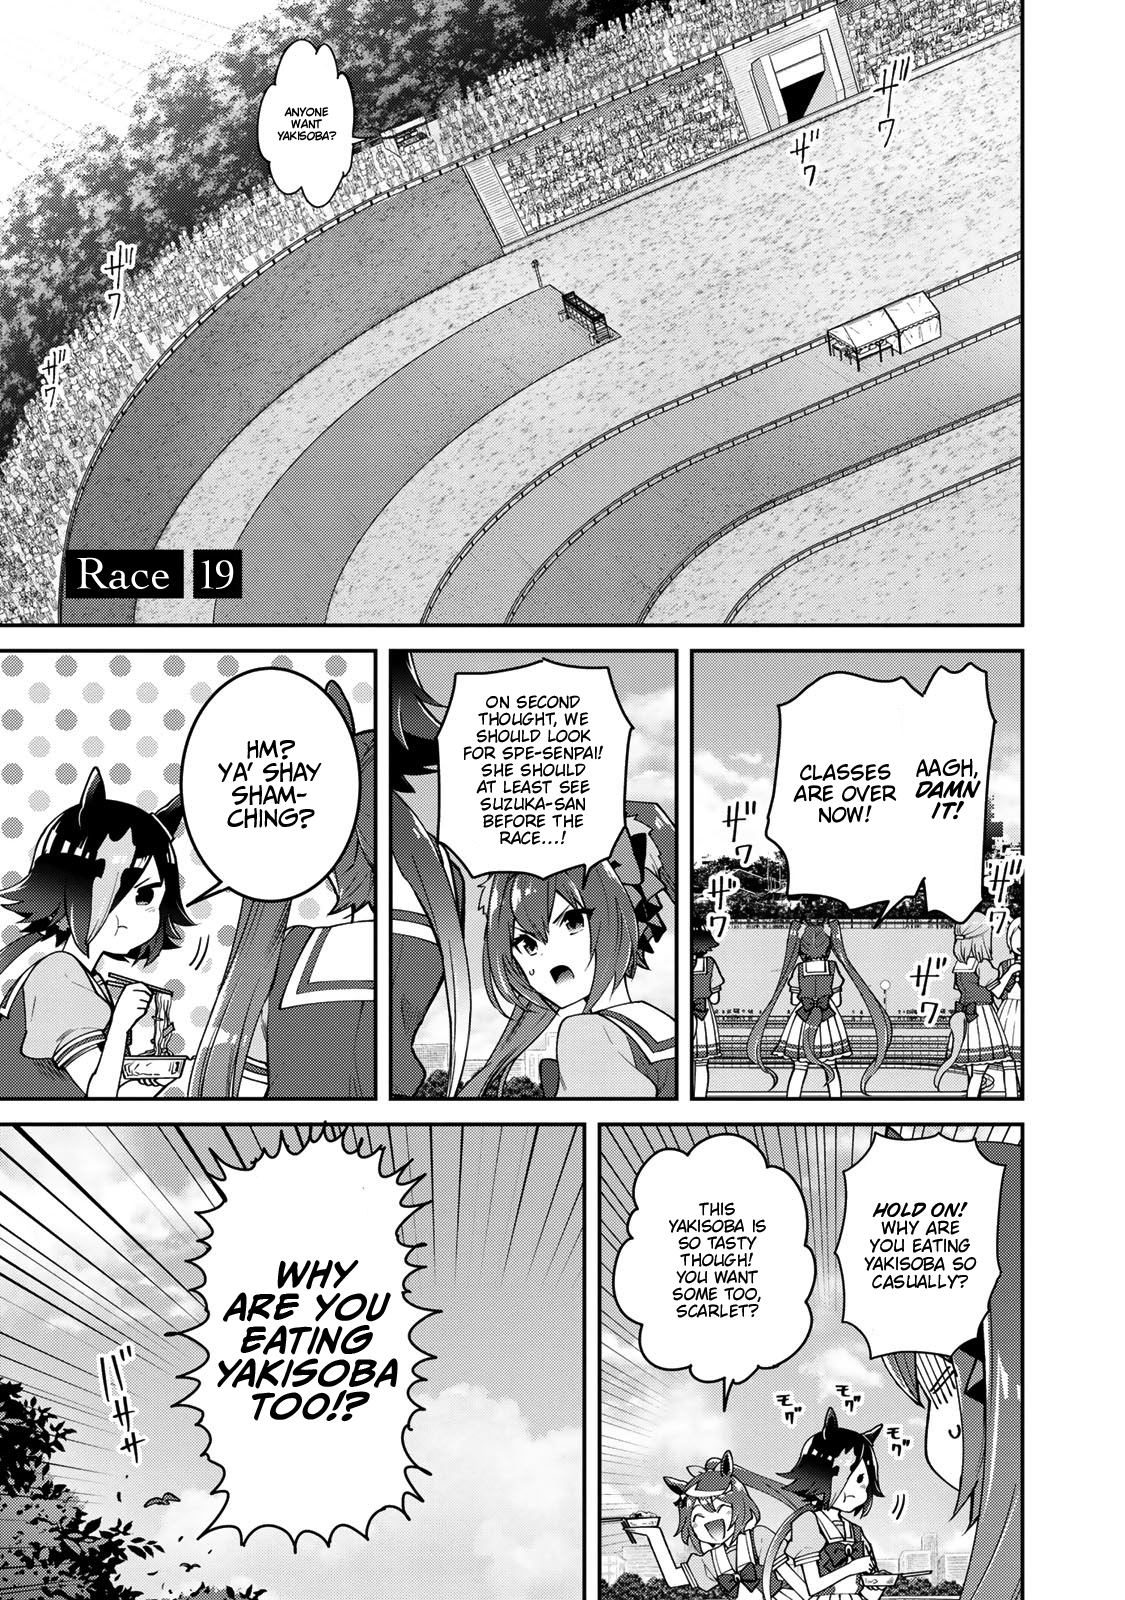 Starting Gate! Uma Musume Pretty Derby - Page 1